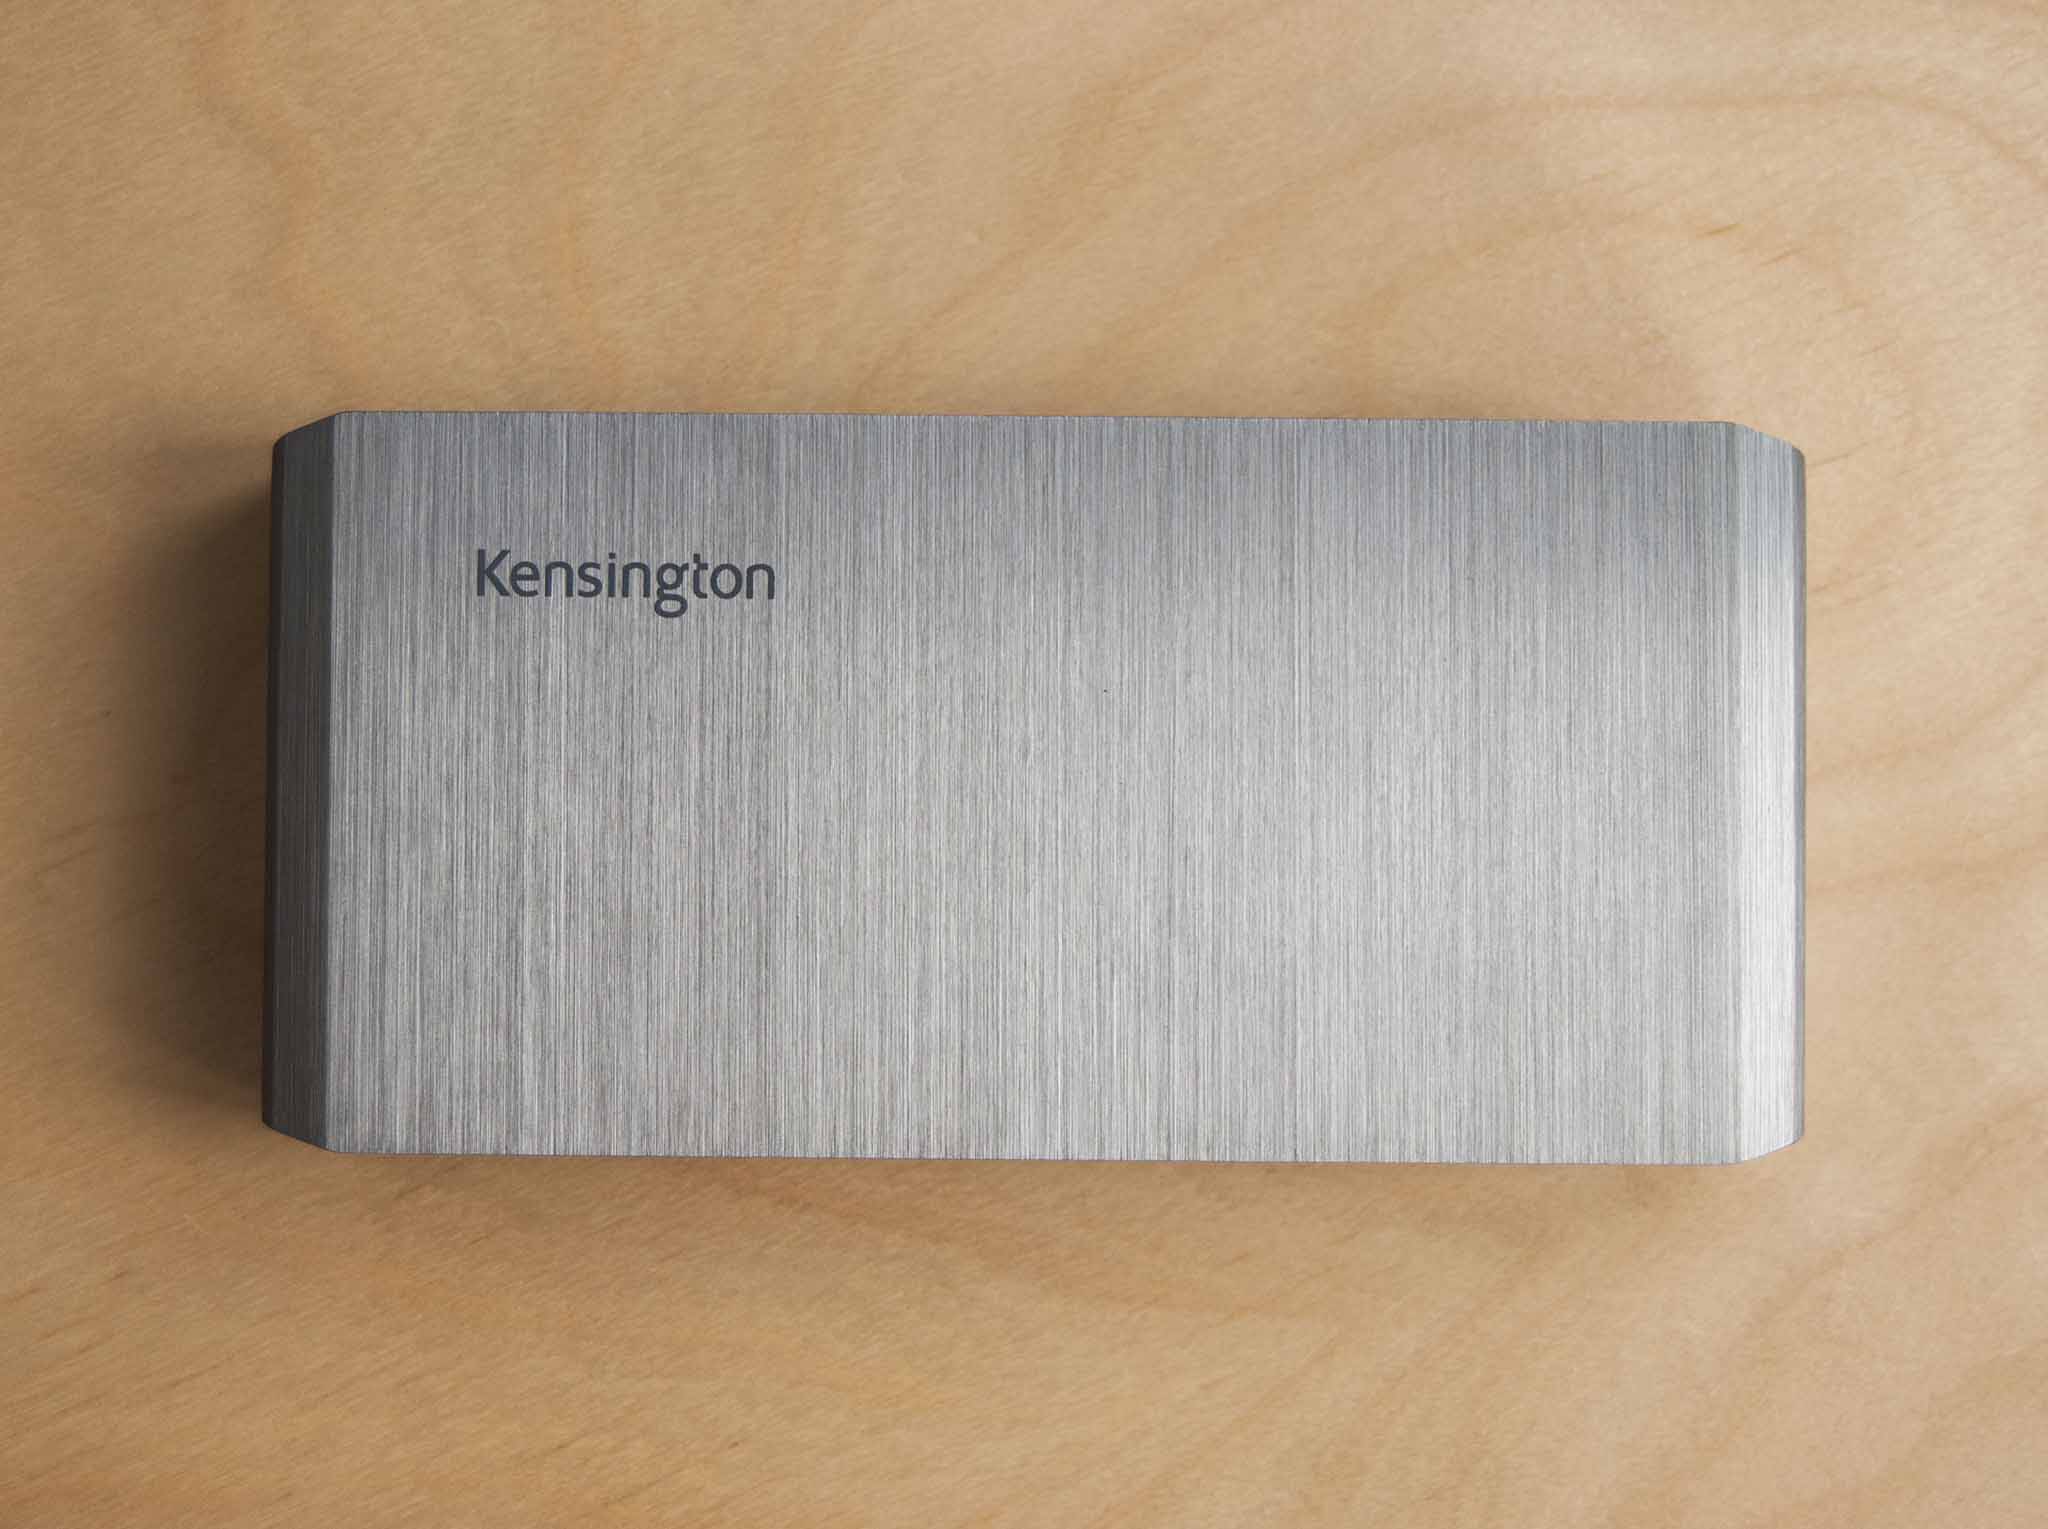 Kensington SD5500T